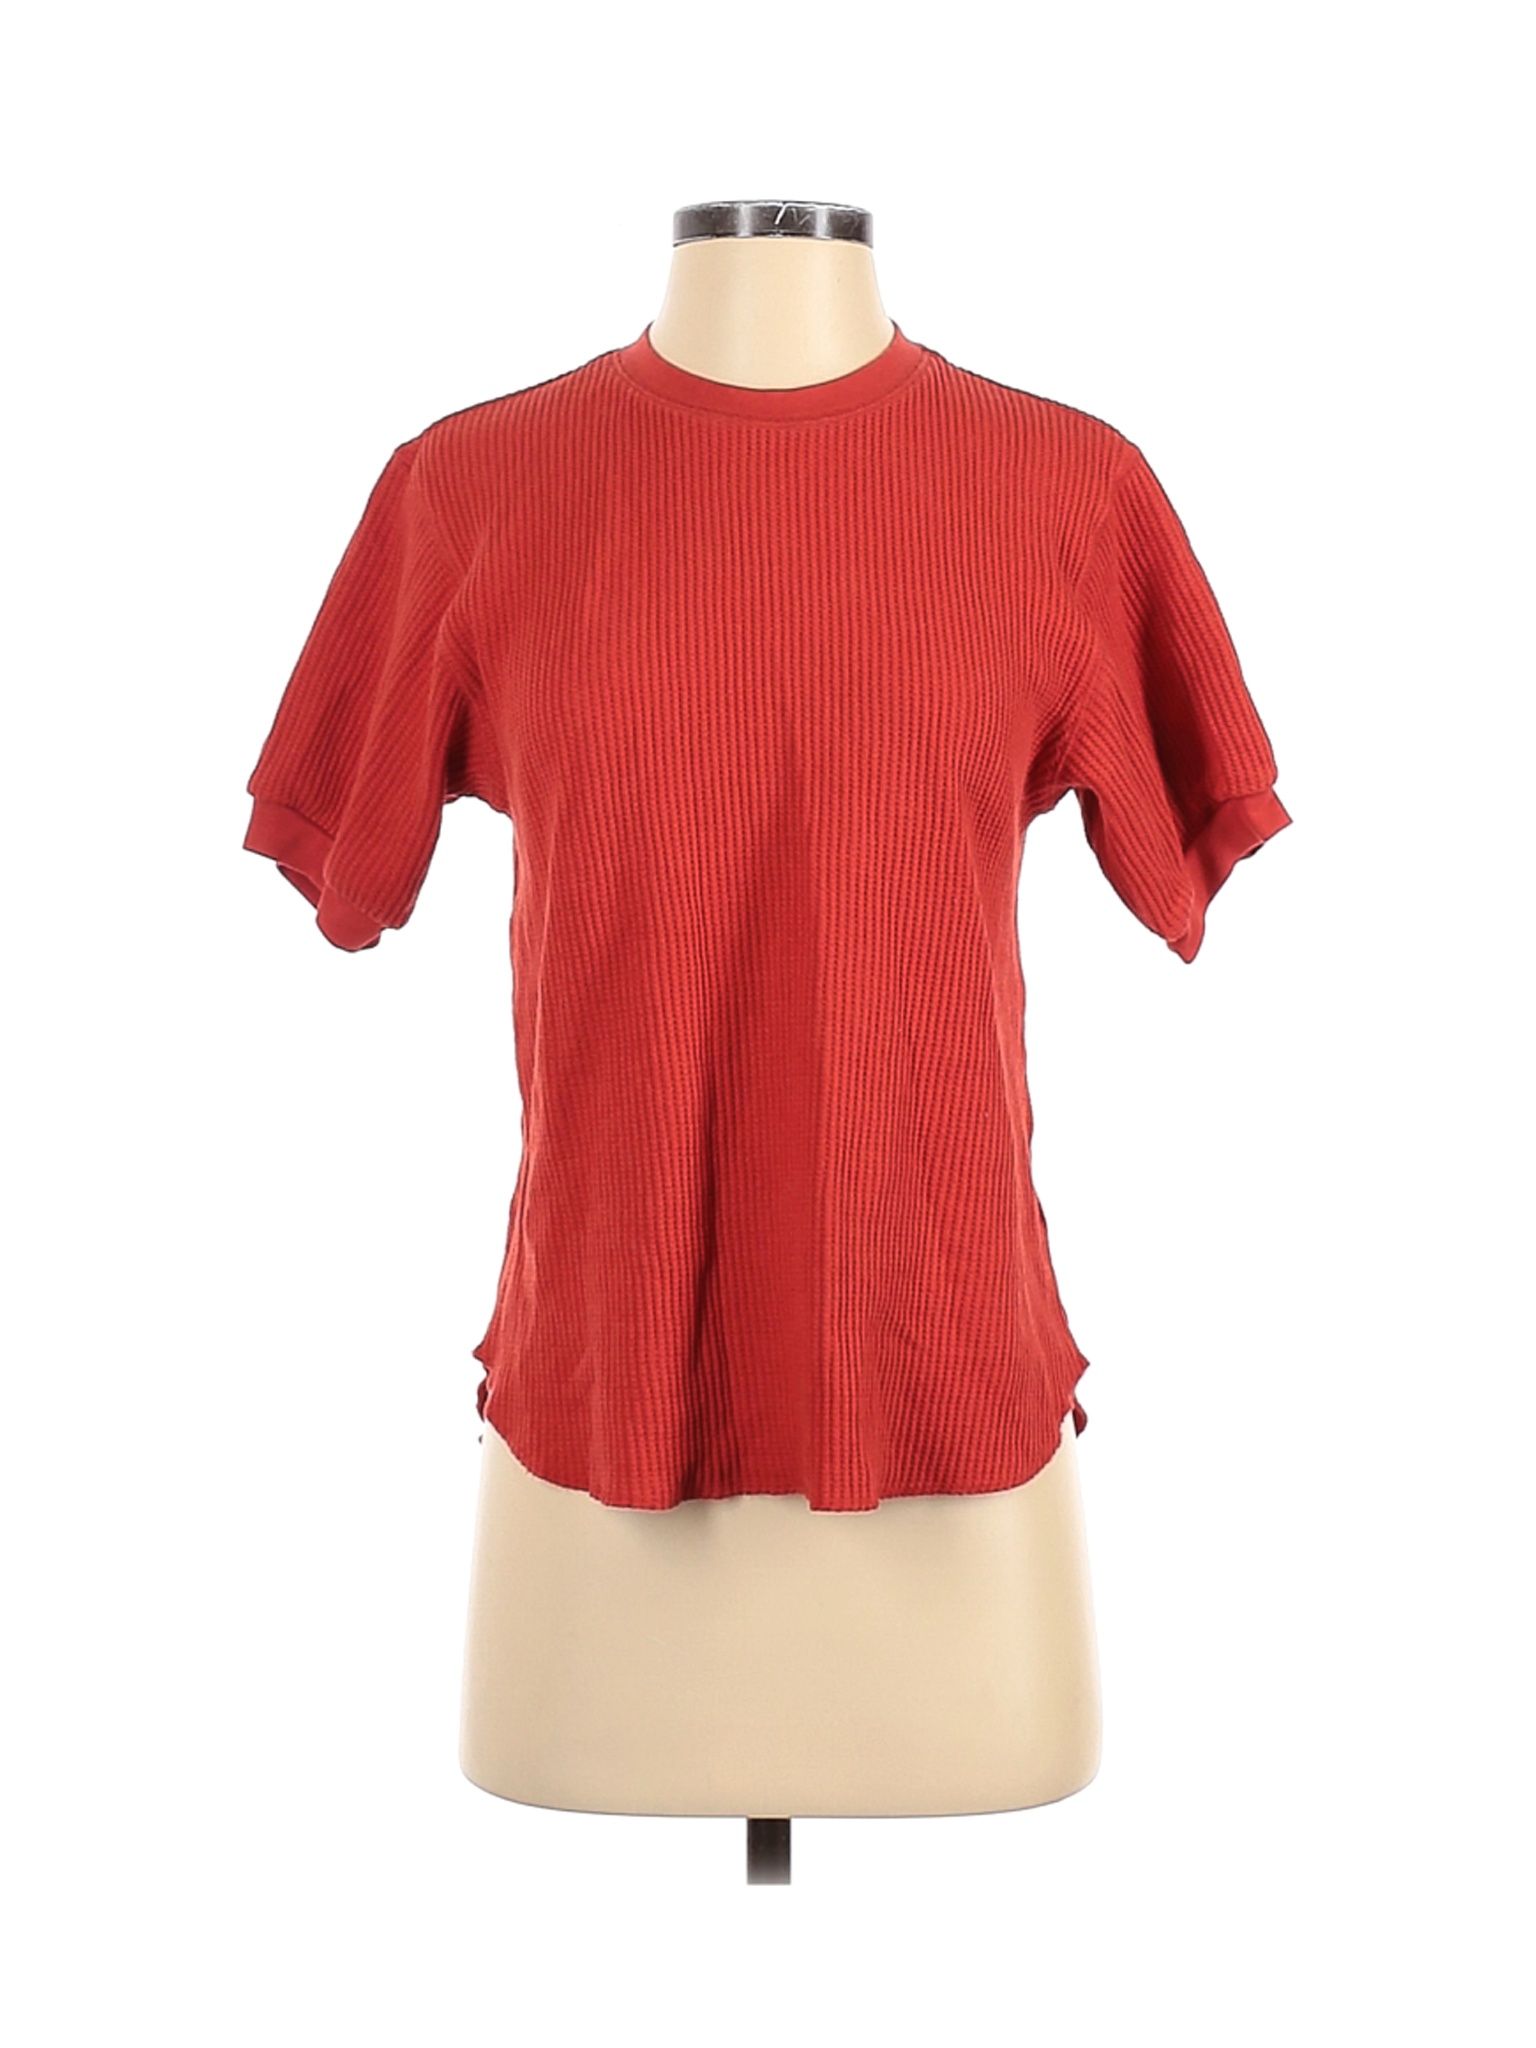 Uniqlo Women Red Short Sleeve T-Shirt XS | eBay